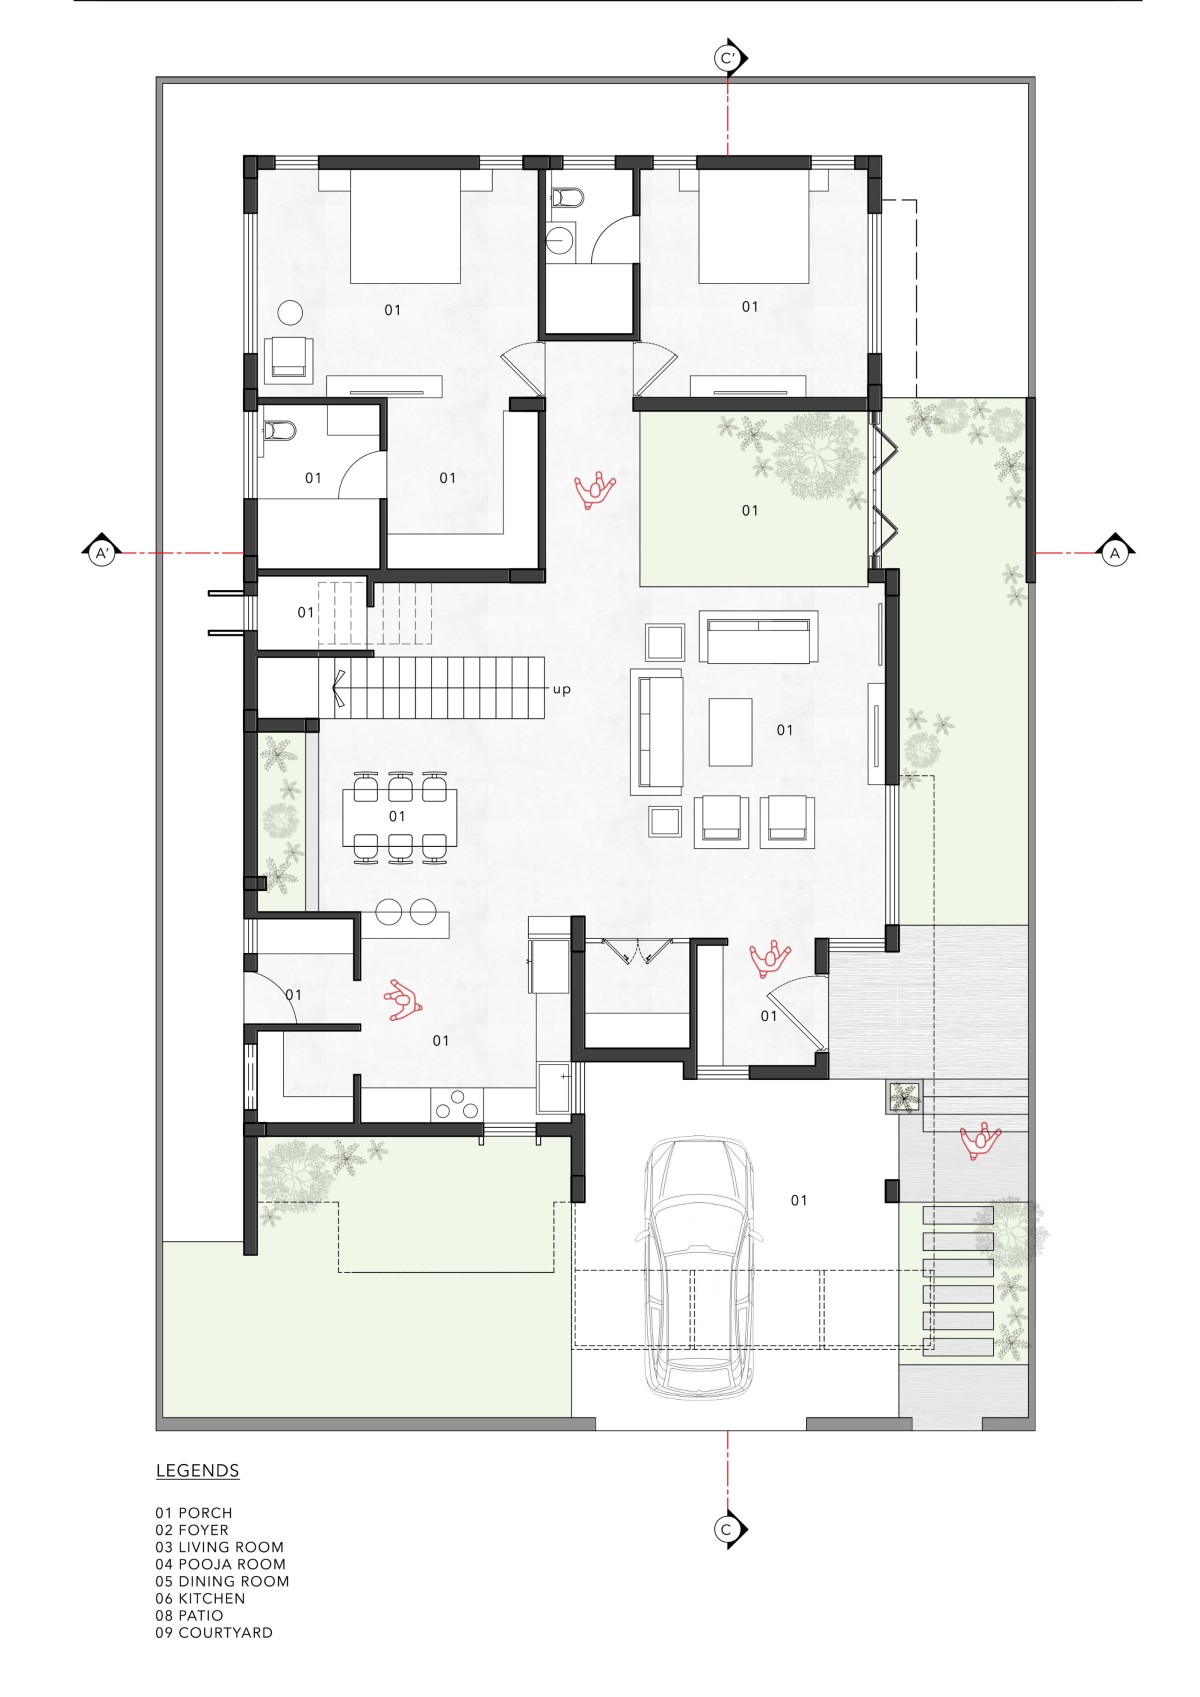 Ground Floor Plan of Neralu by Jalihal Associates